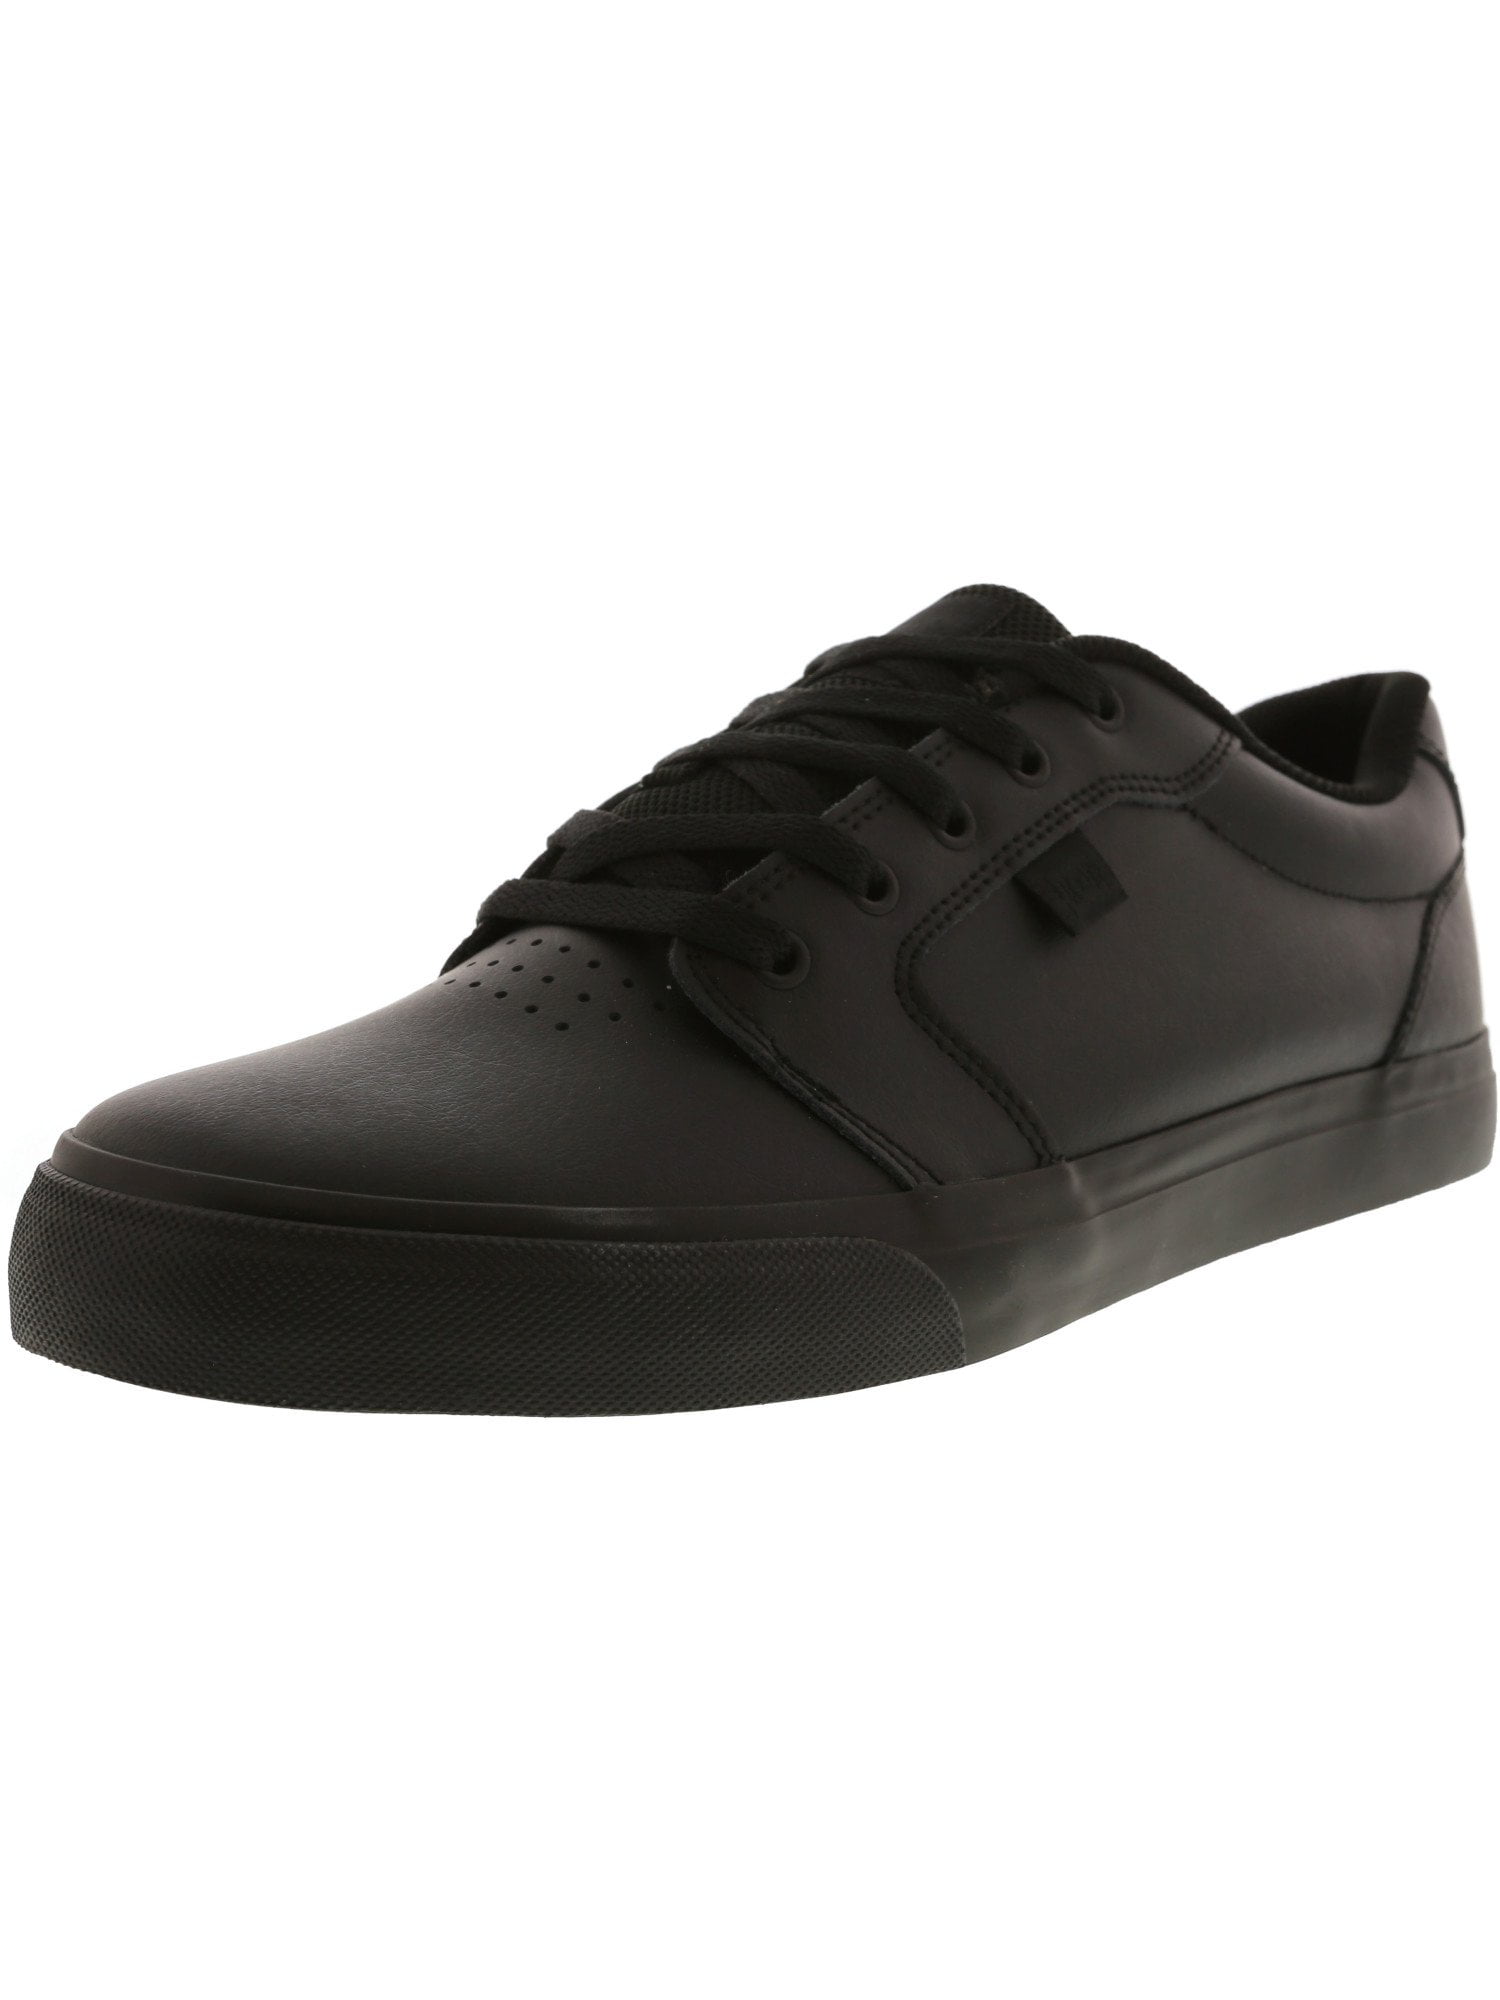 DC Anvil SE Shoes Leather Black Black For Men's New In Box 300147 